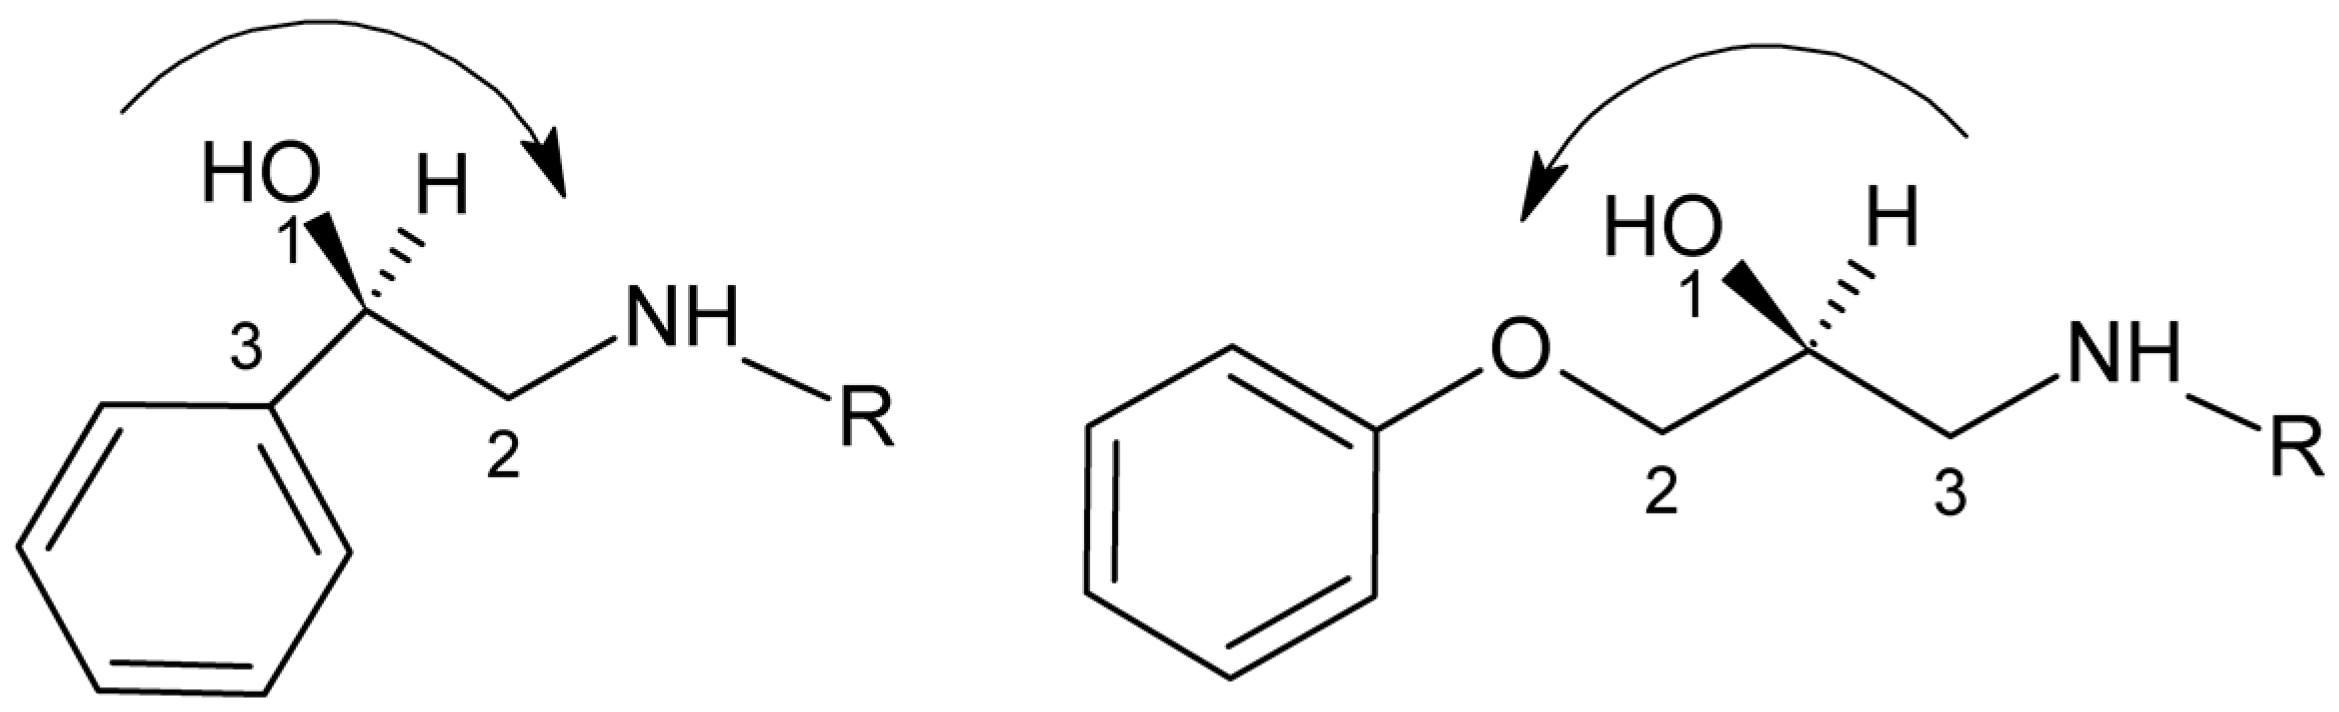 Absorption spectra of: (A) acebutolol (1), atenolol (2), labetalol (3)